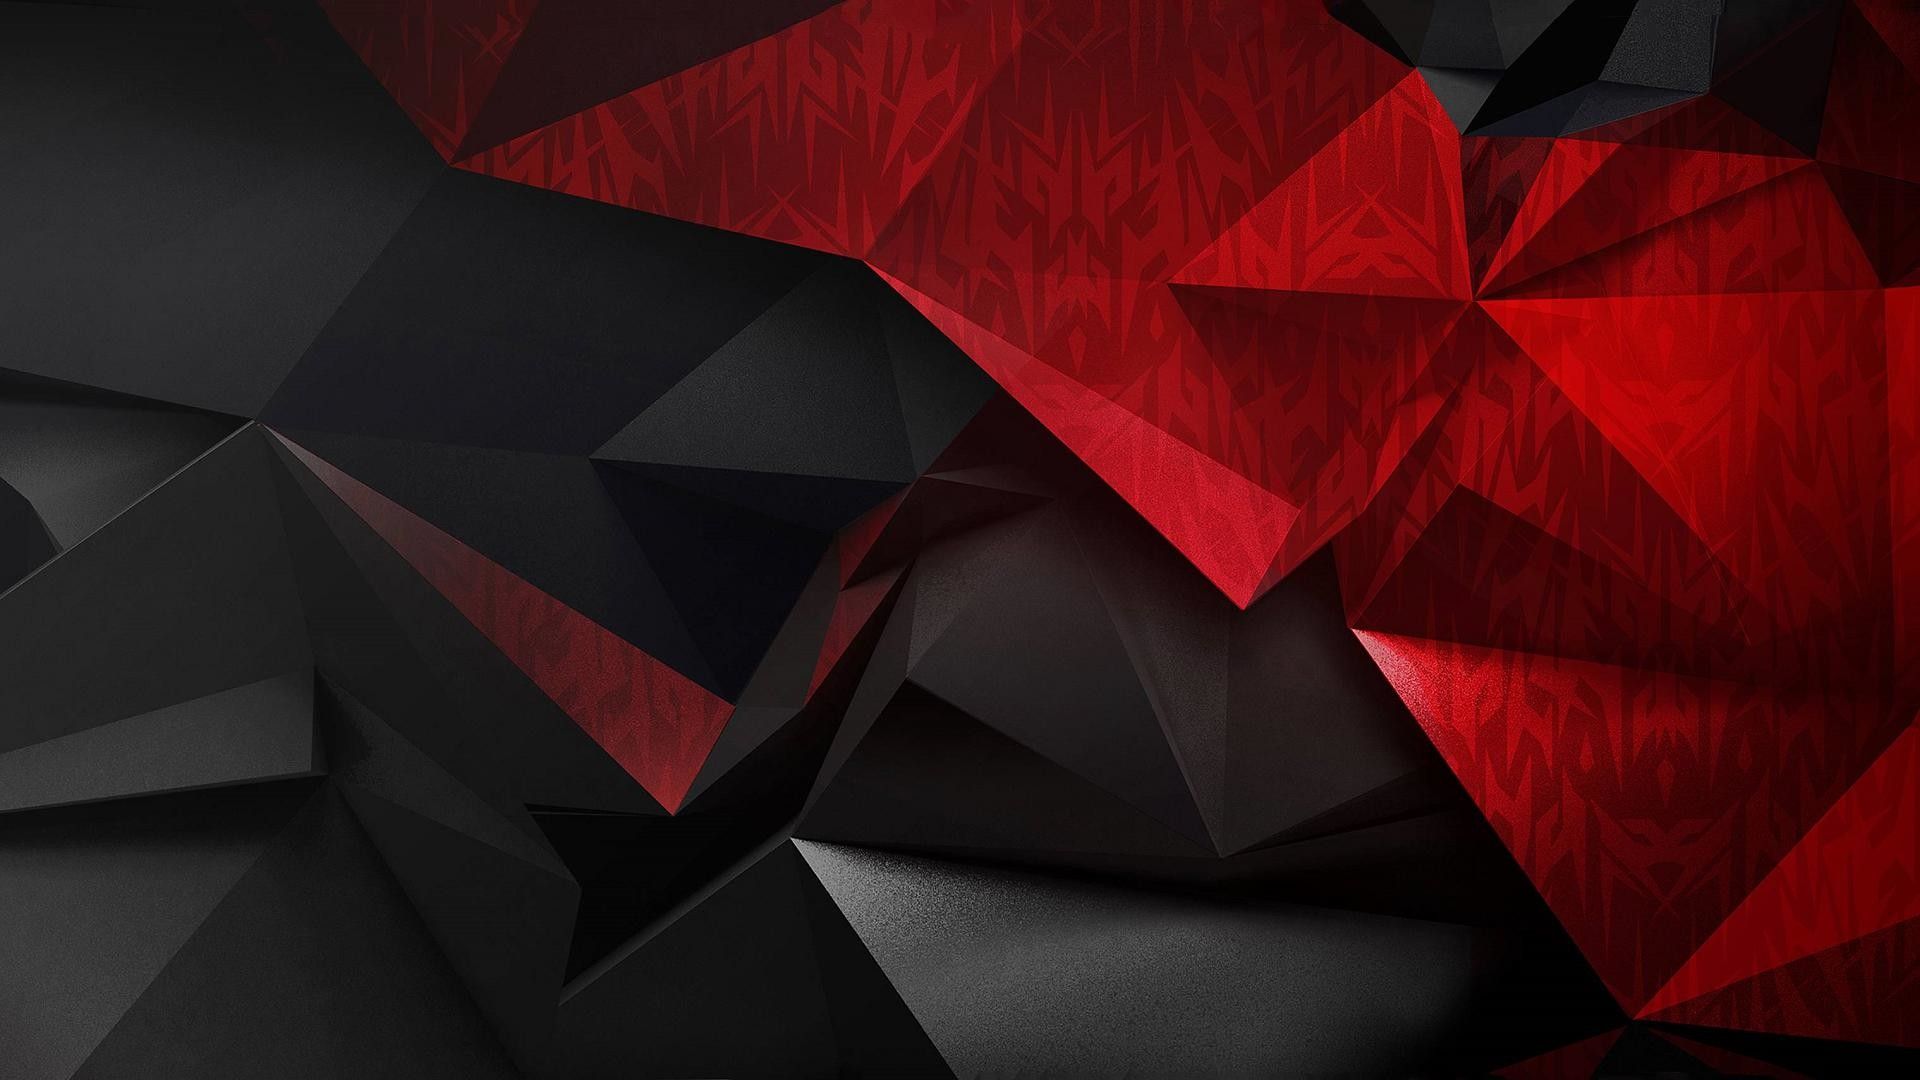 acer predator wallpaper,red,black,triangle,pattern,design